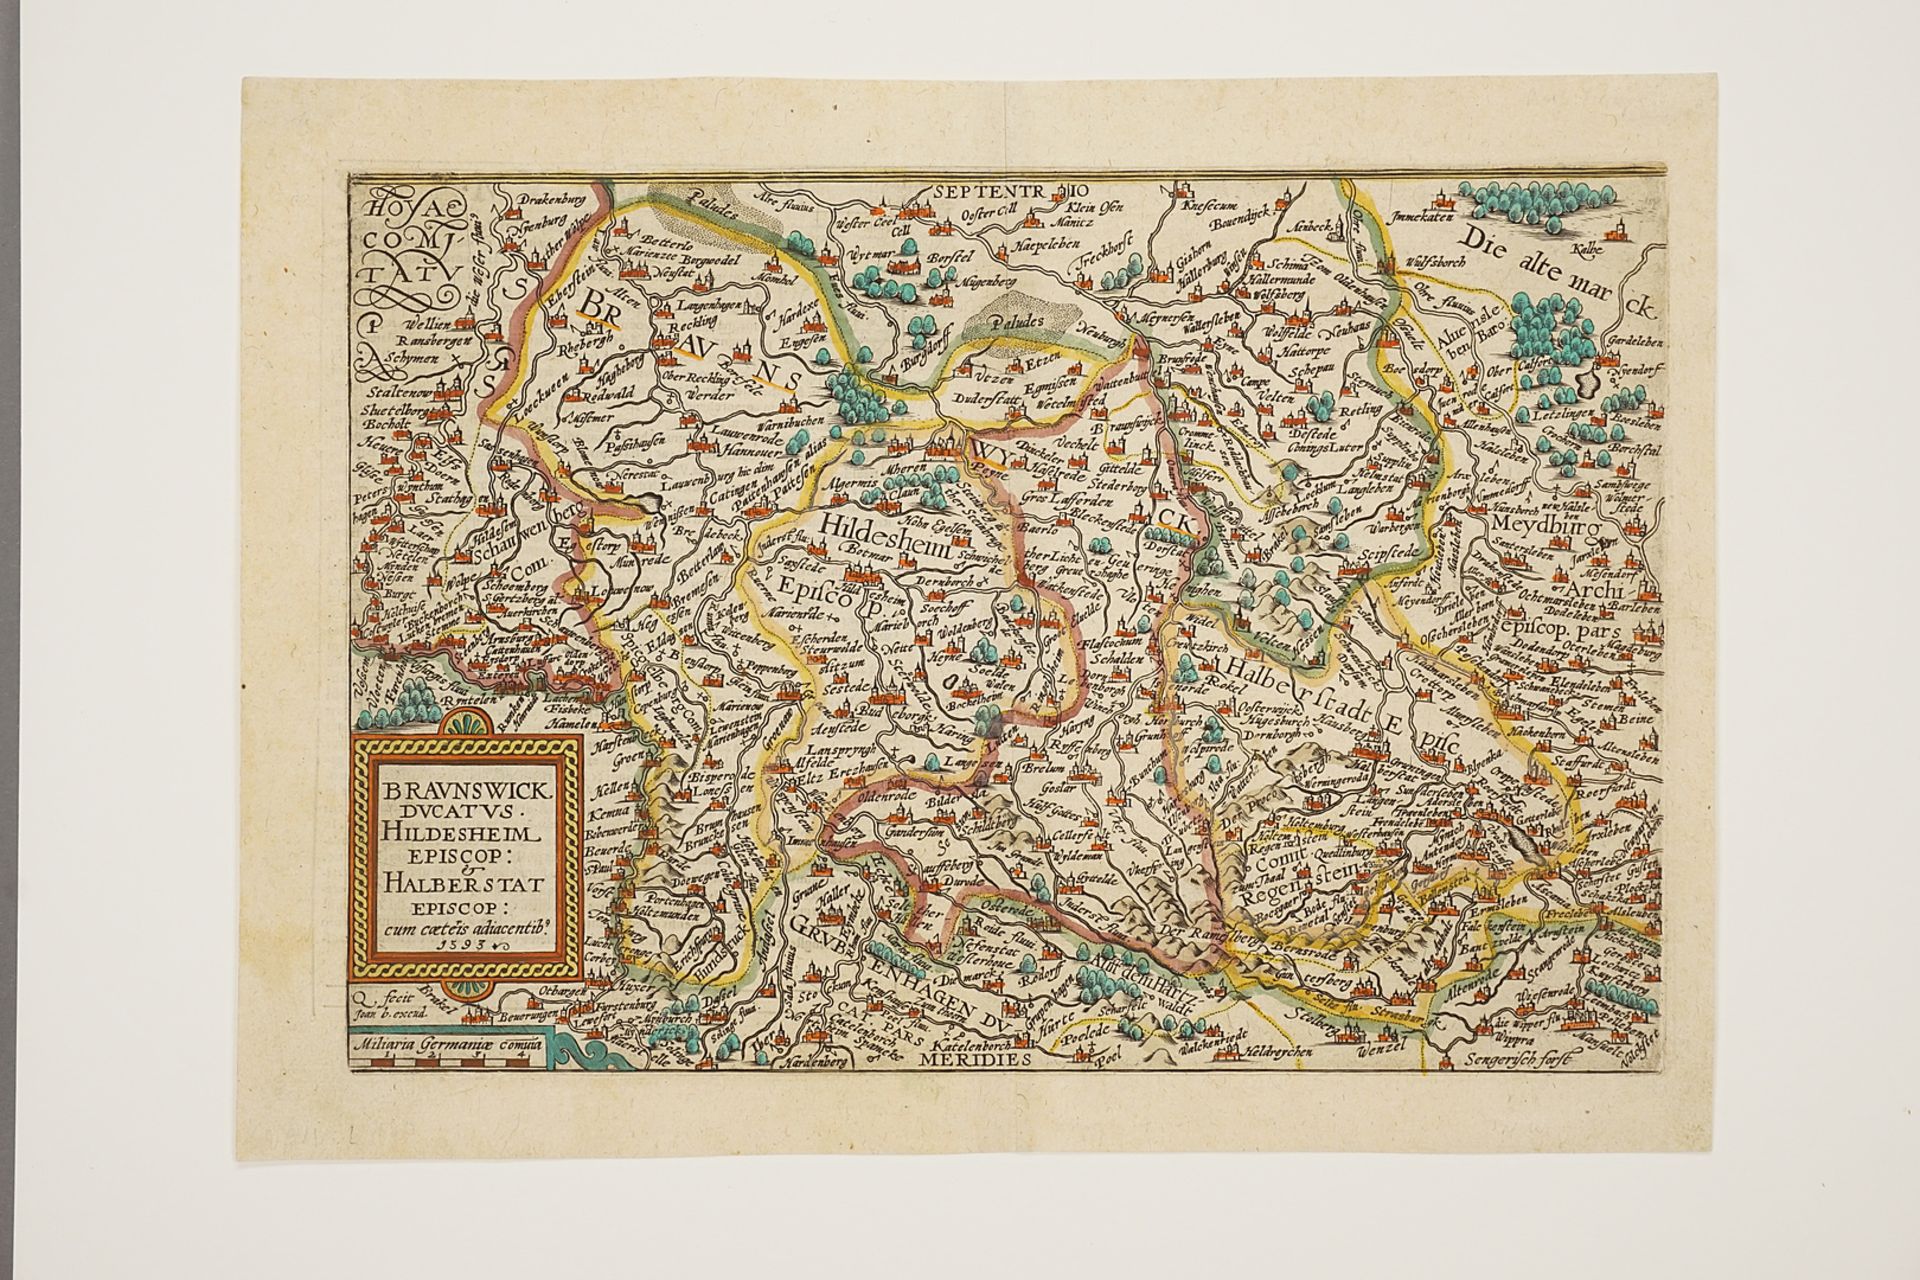 Mat(t)hias Quad (1557-1613), "Braunswick ducatus […]" (Map of Brunswick, Hildesheim and Halberstadt) - Image 3 of 4